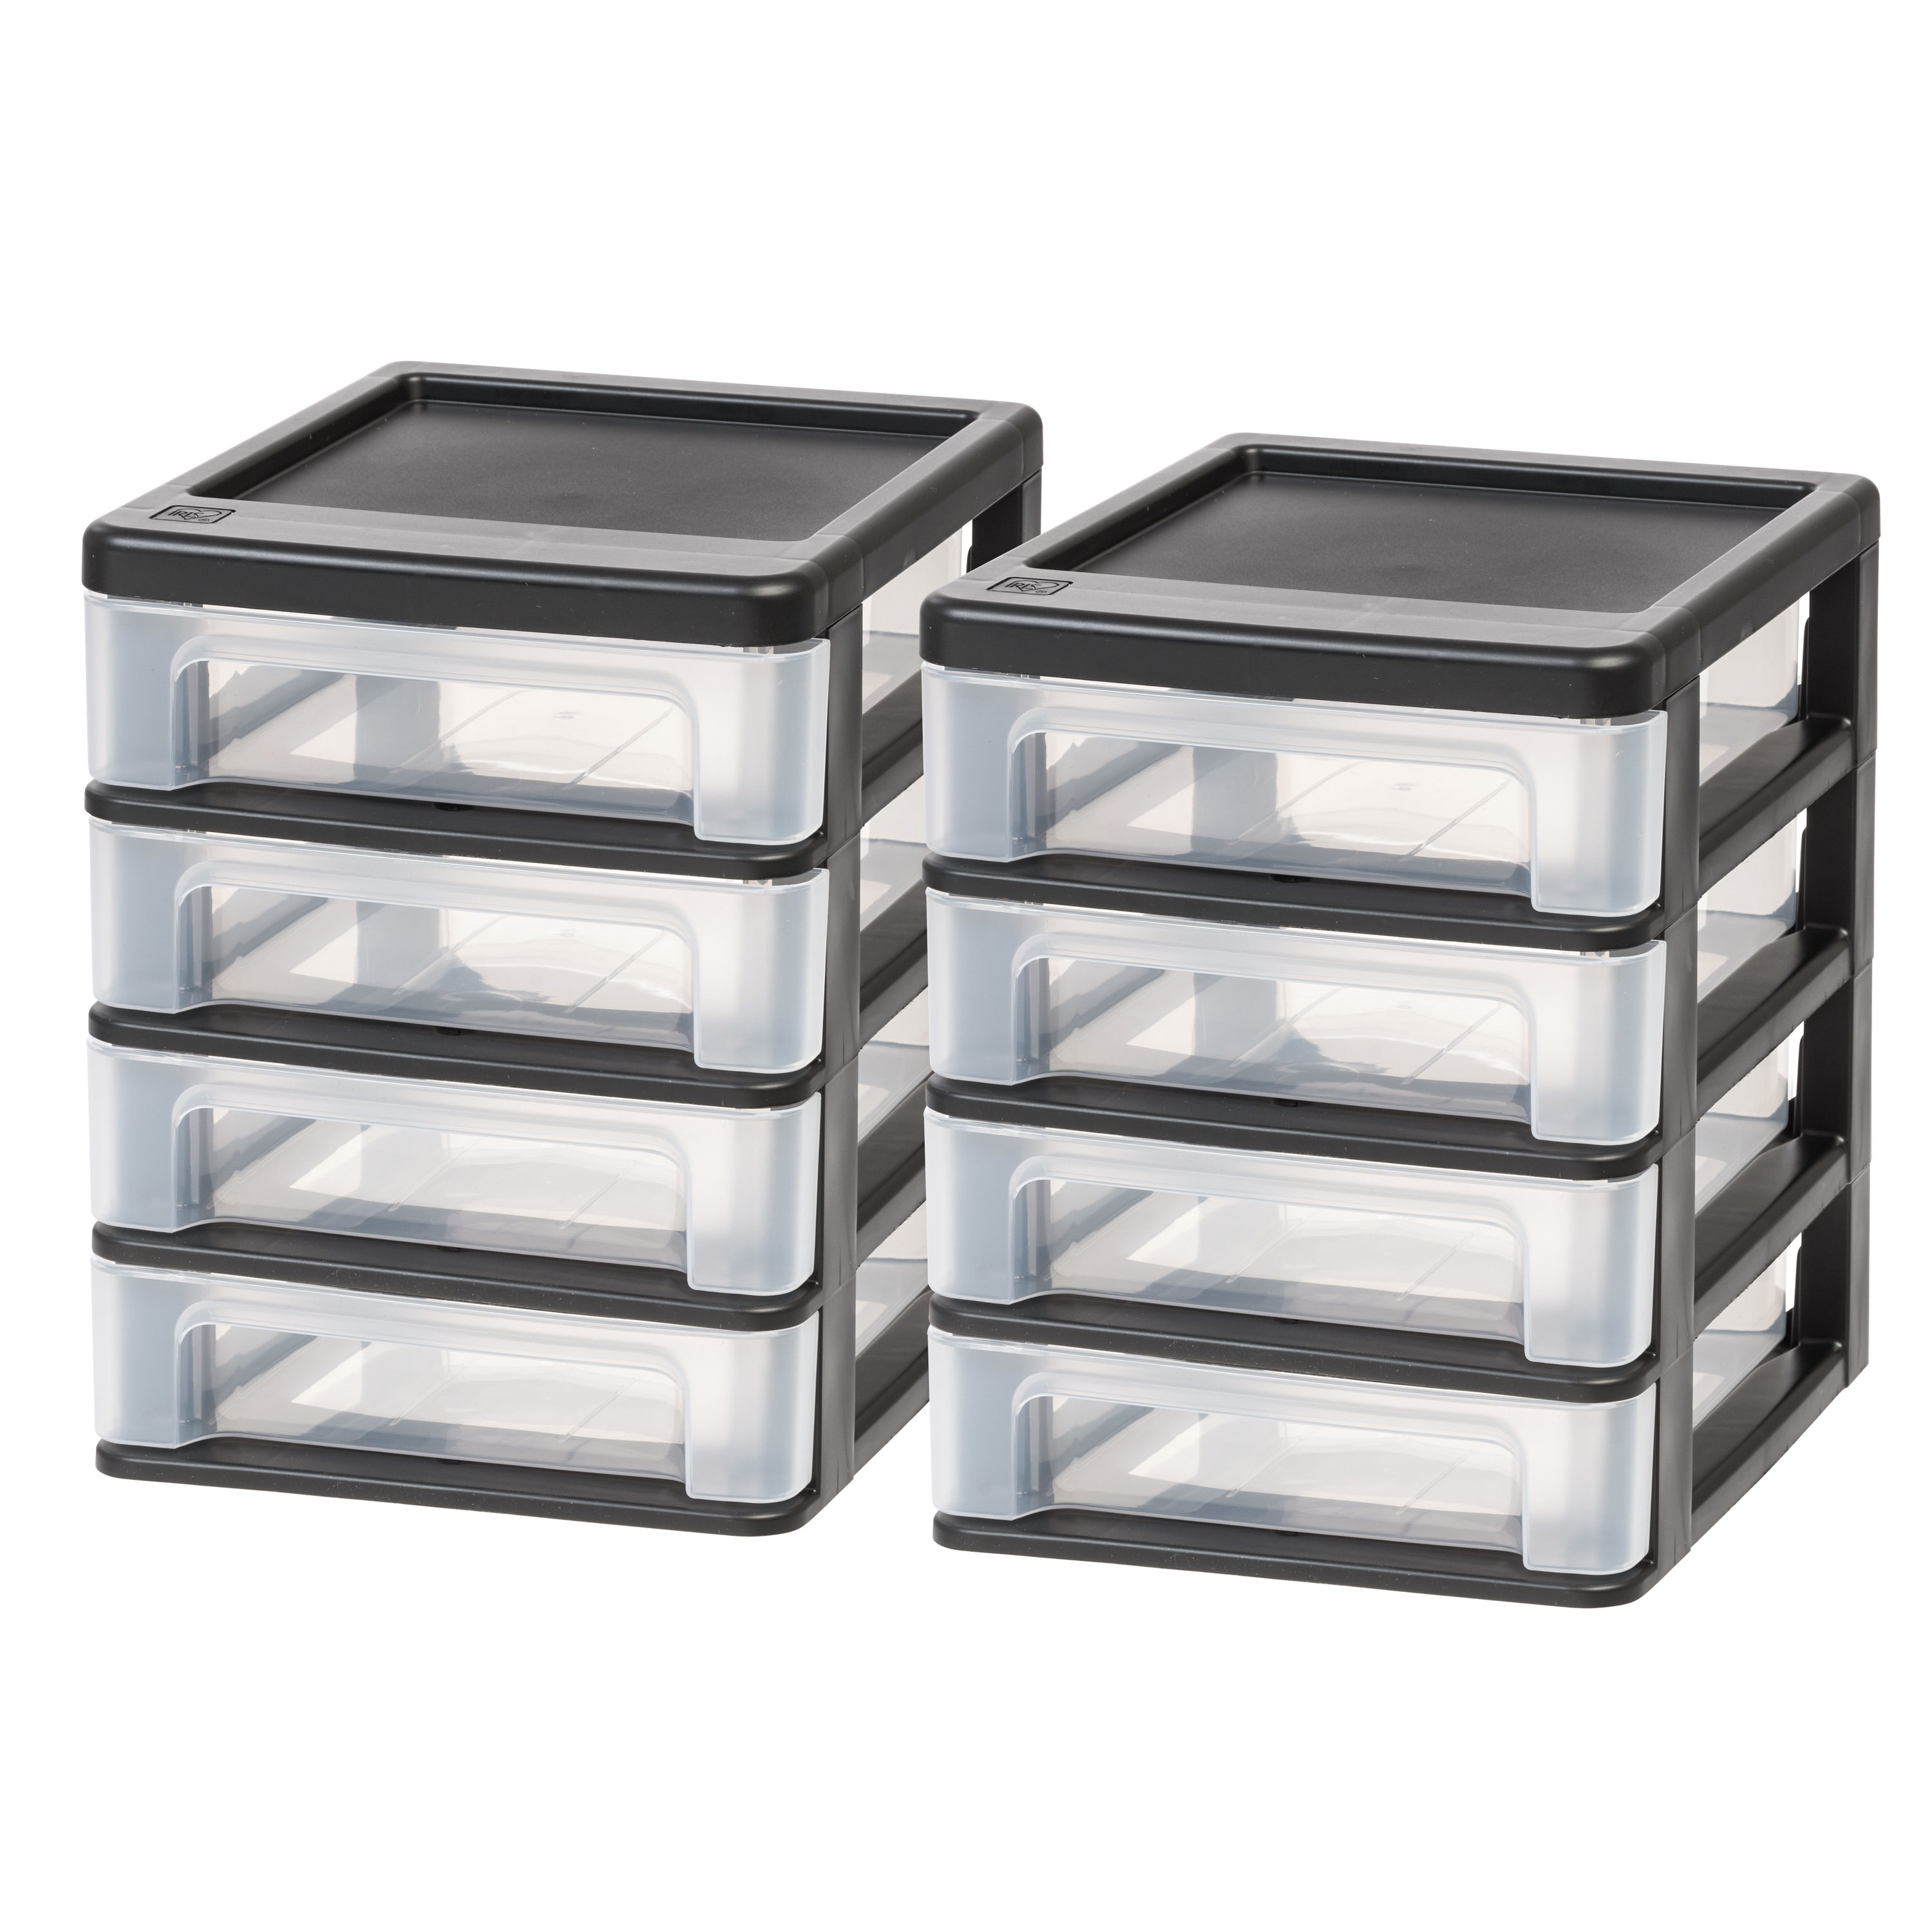 Bview Art 4 Drawers Desk Storage Organizer,Stackable Desktop Drawer  Cabinet, Clear Storage Box for Makeup